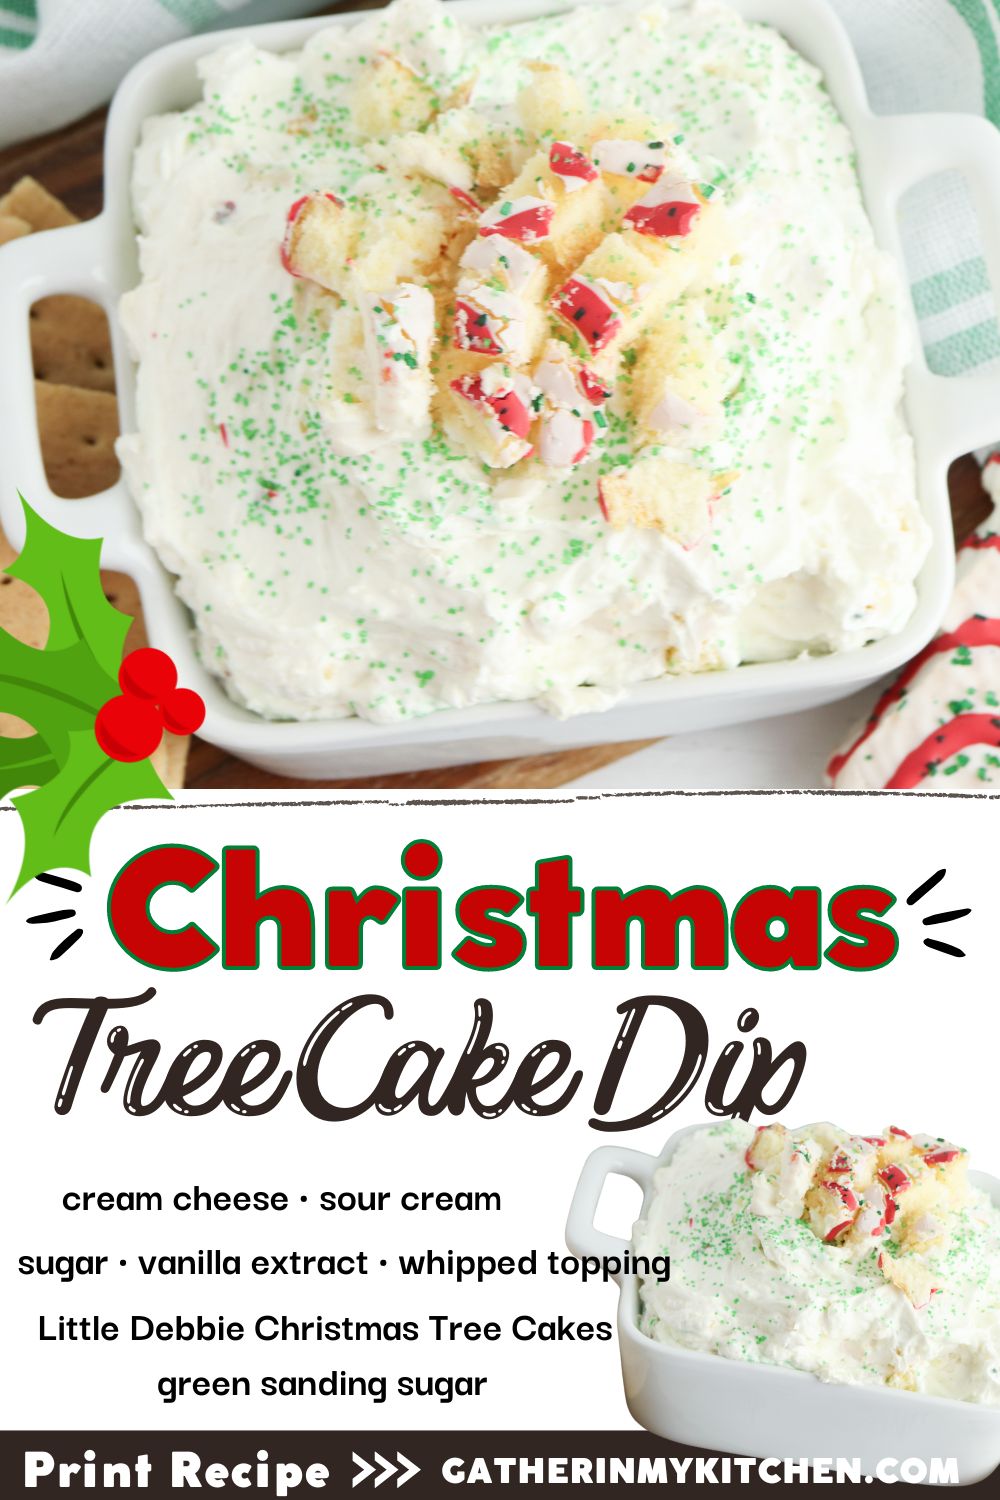 Top has pic of Christmas tree dip, bottom has "Christmas Tree Cake Dip" and ingredients listed below.